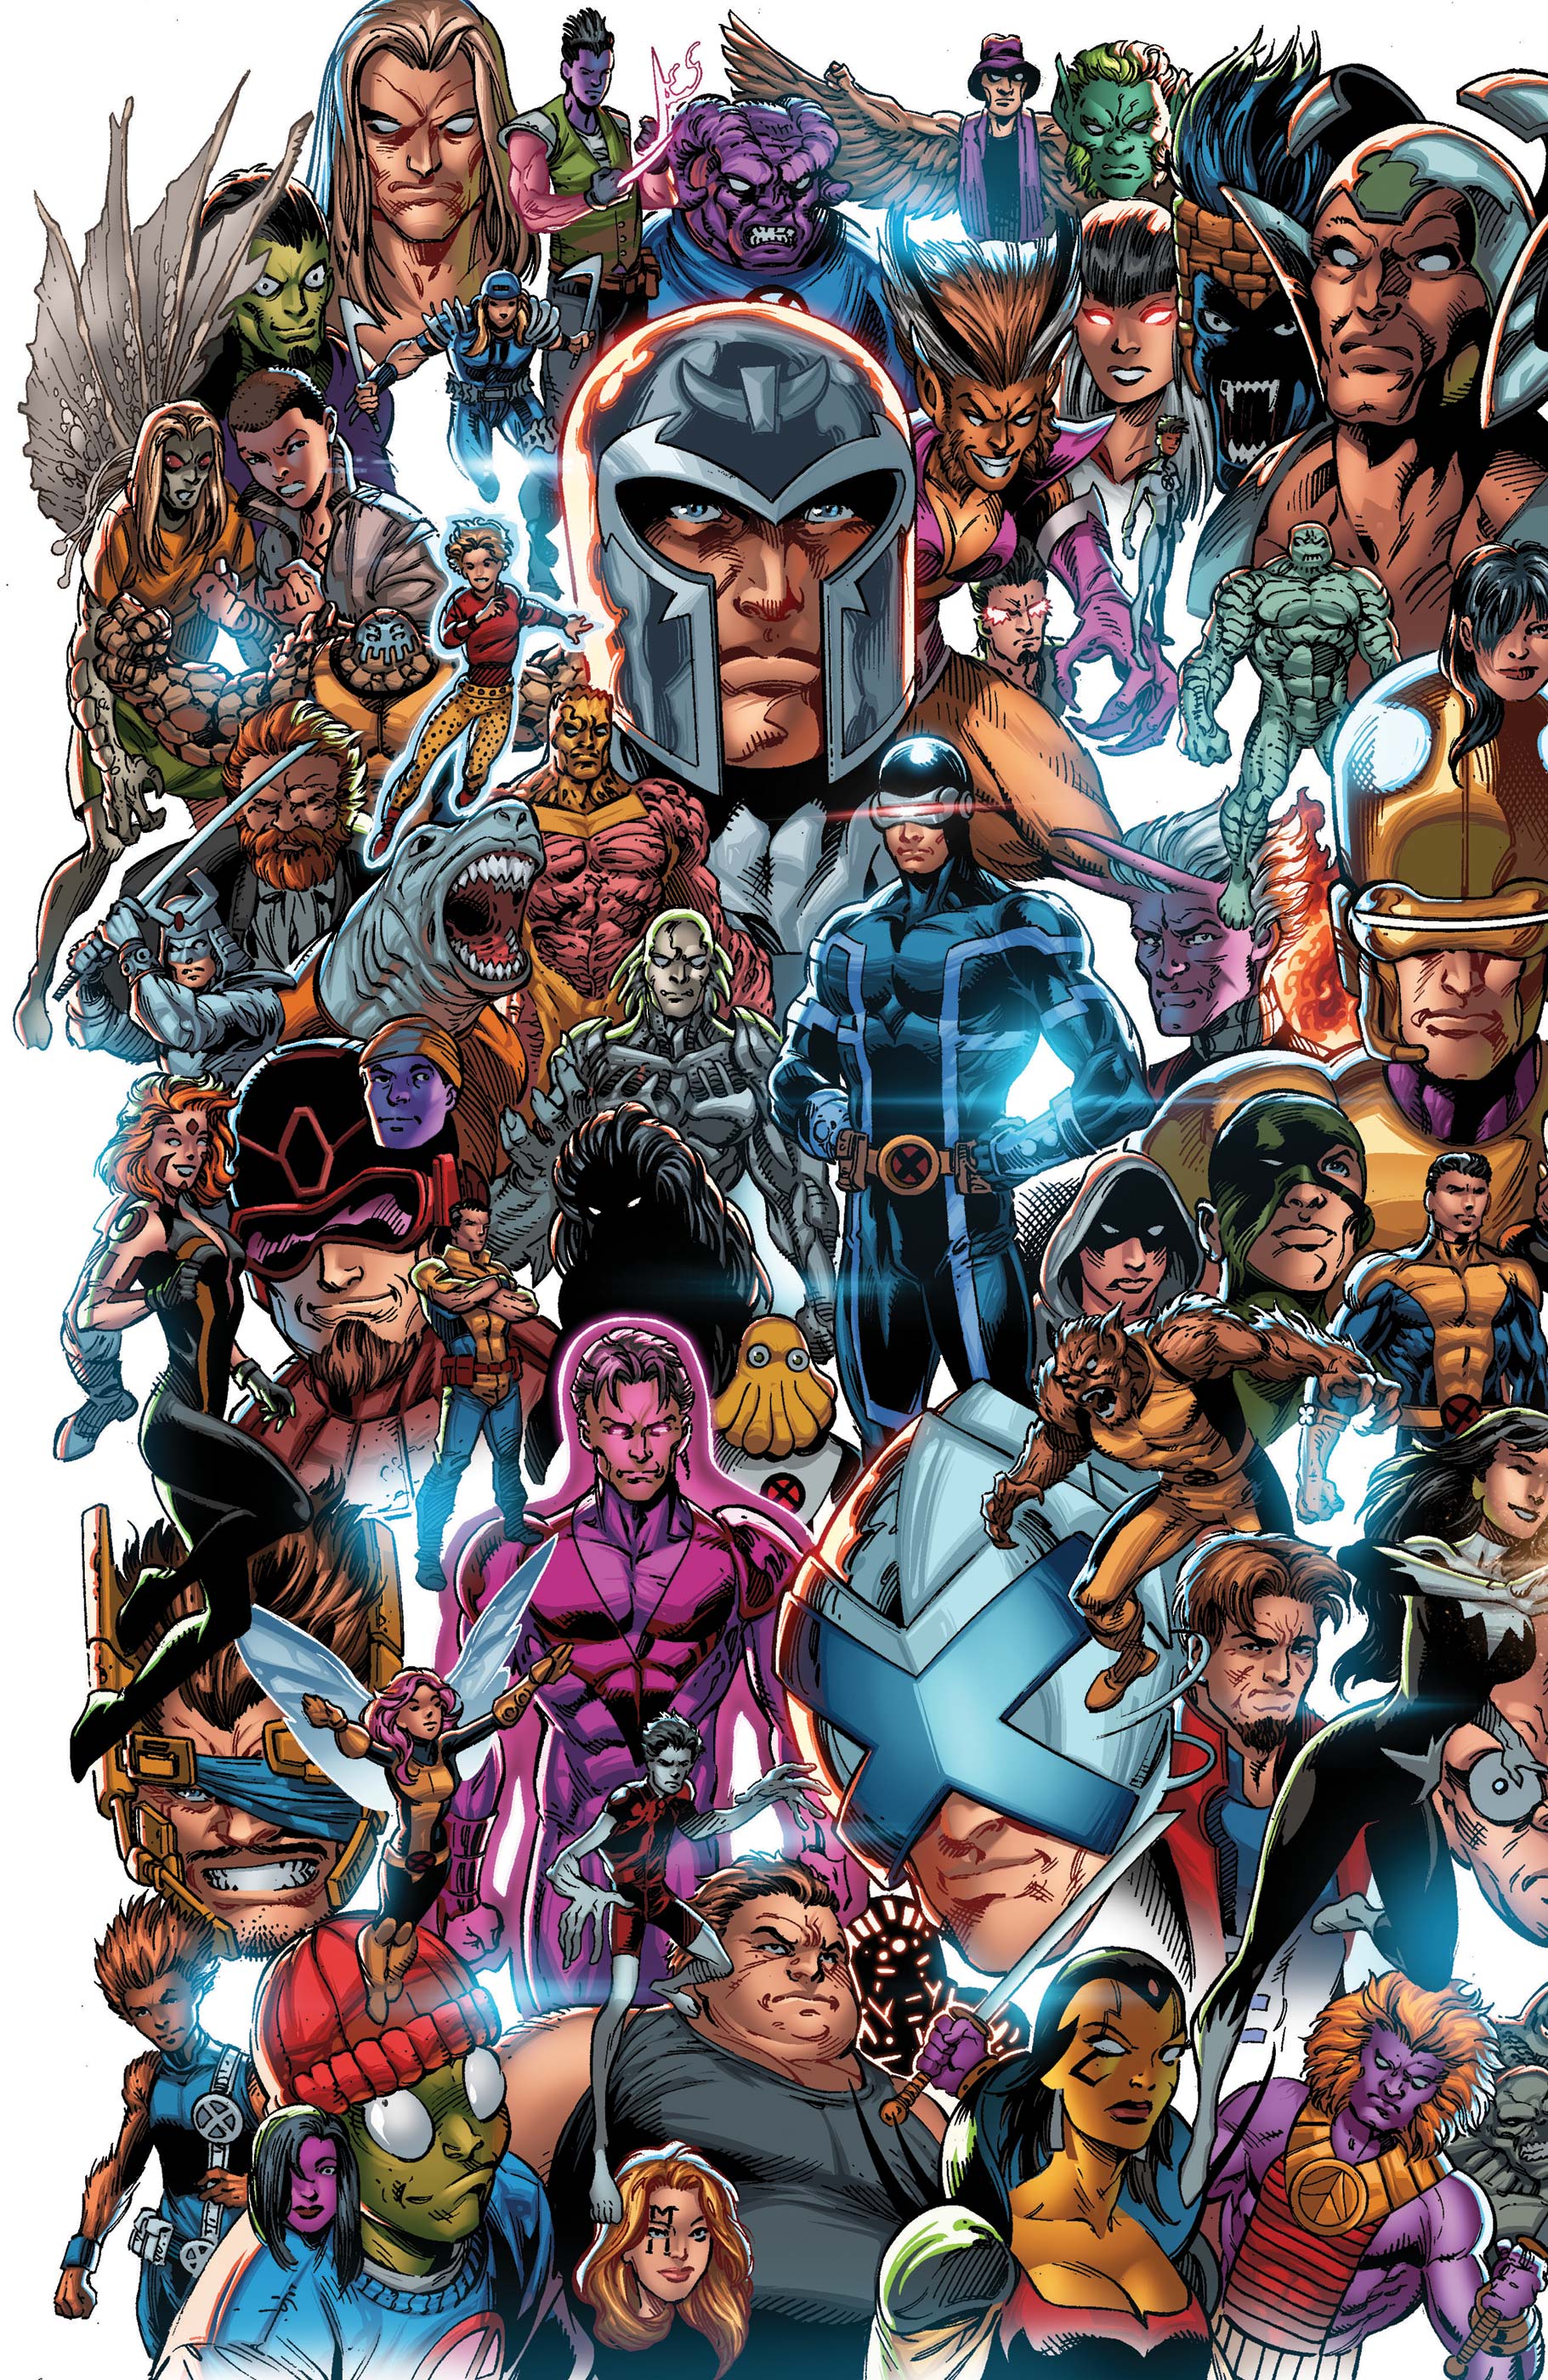 X-Men (2019) #1 (Variant)